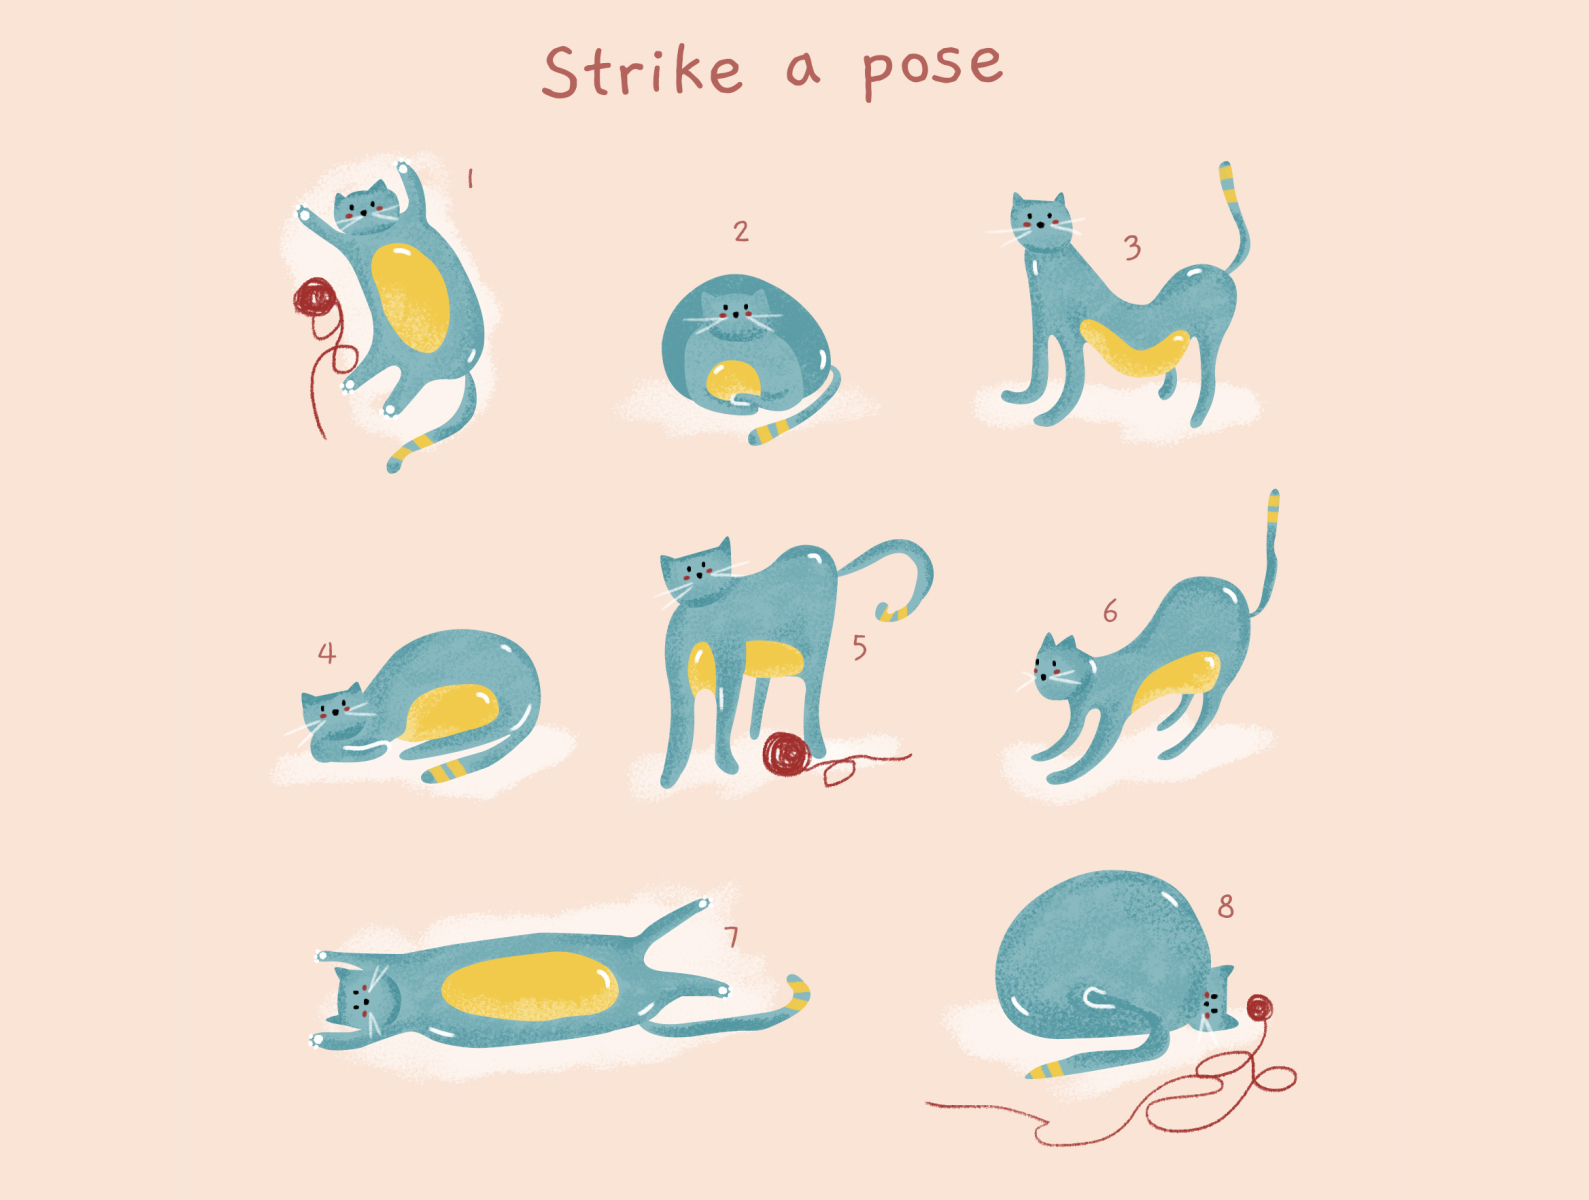 Strike a pose 📸 by Valentina Salvi on Dribbble